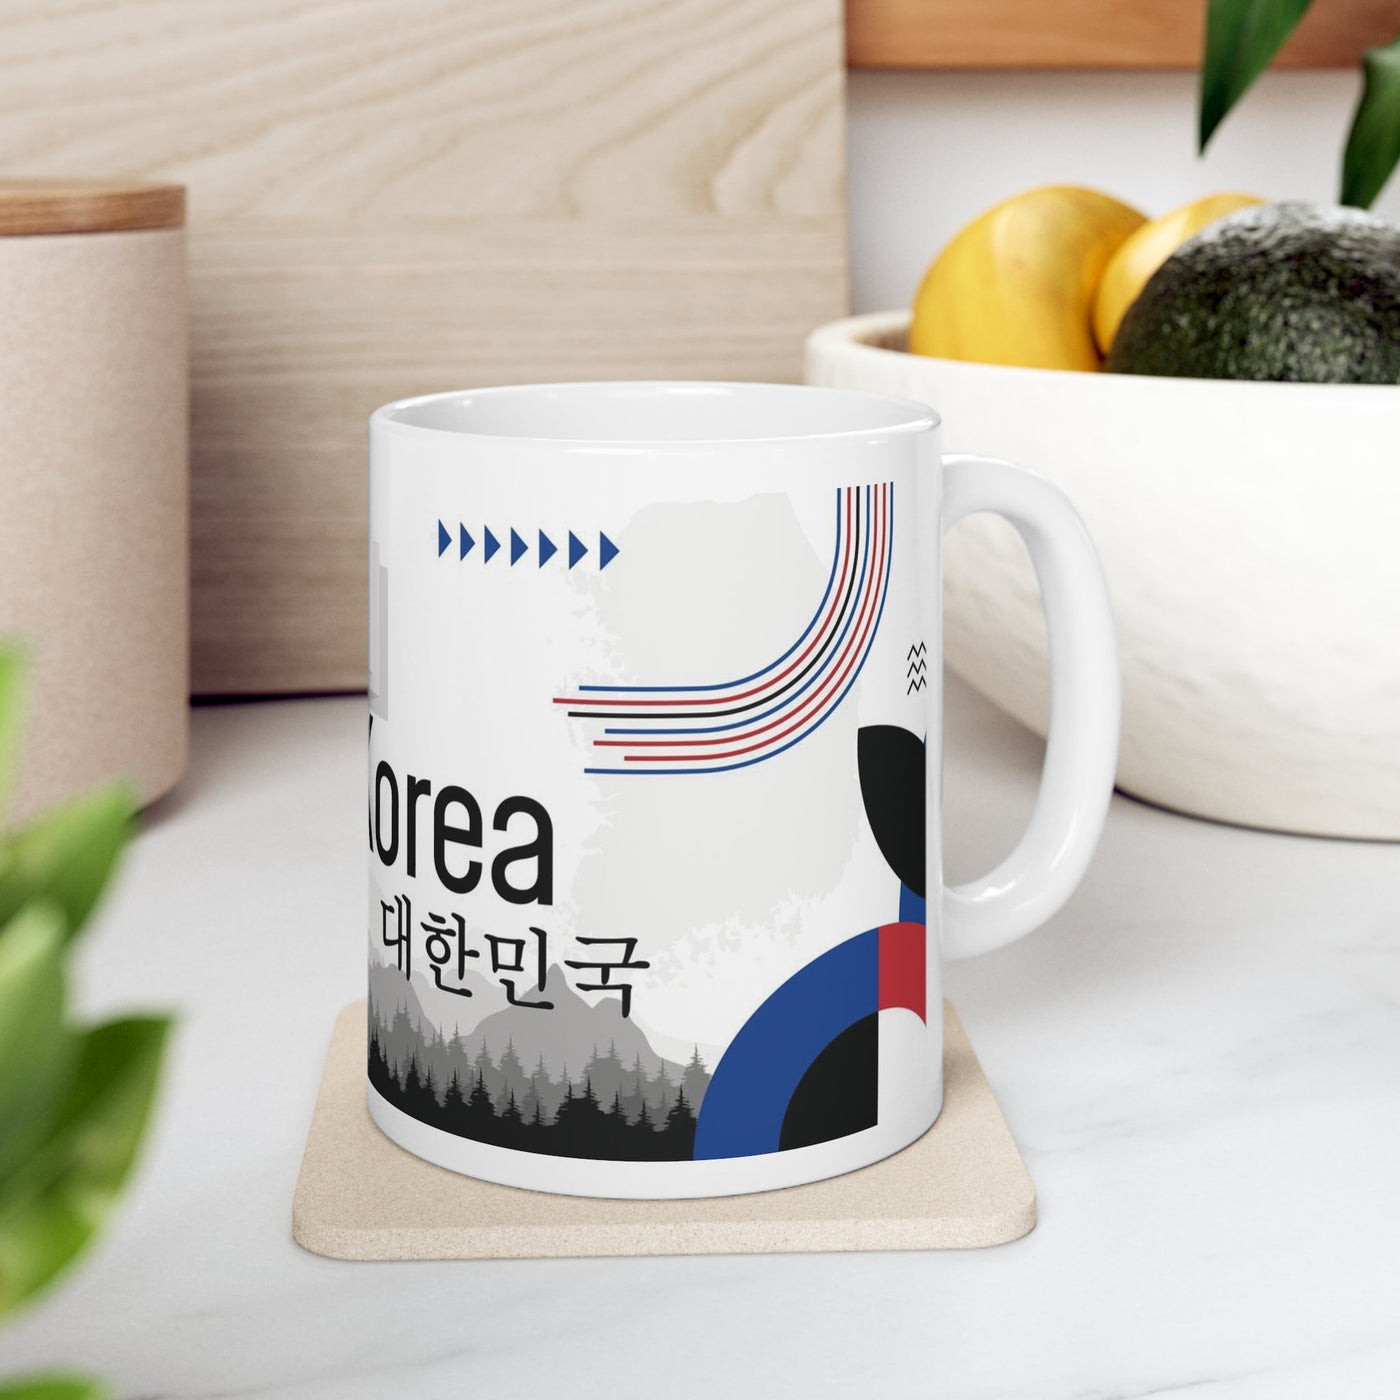 South Korea Coffee Mug - Ezra's Clothing